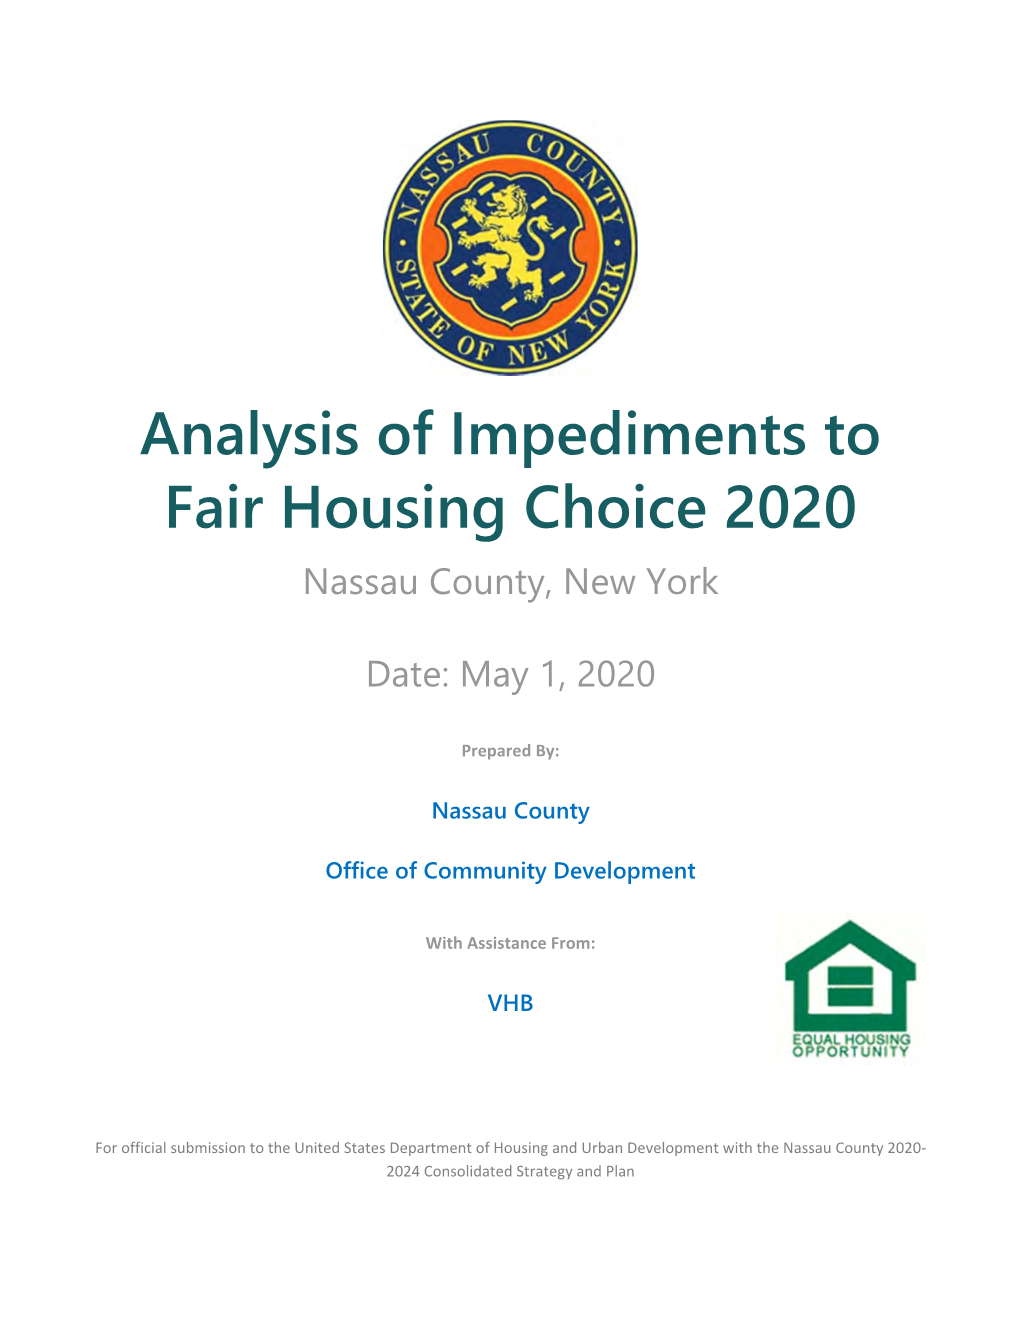 Analysis of Impediments to Fair Housing Choice 2020 Nassau County, New York